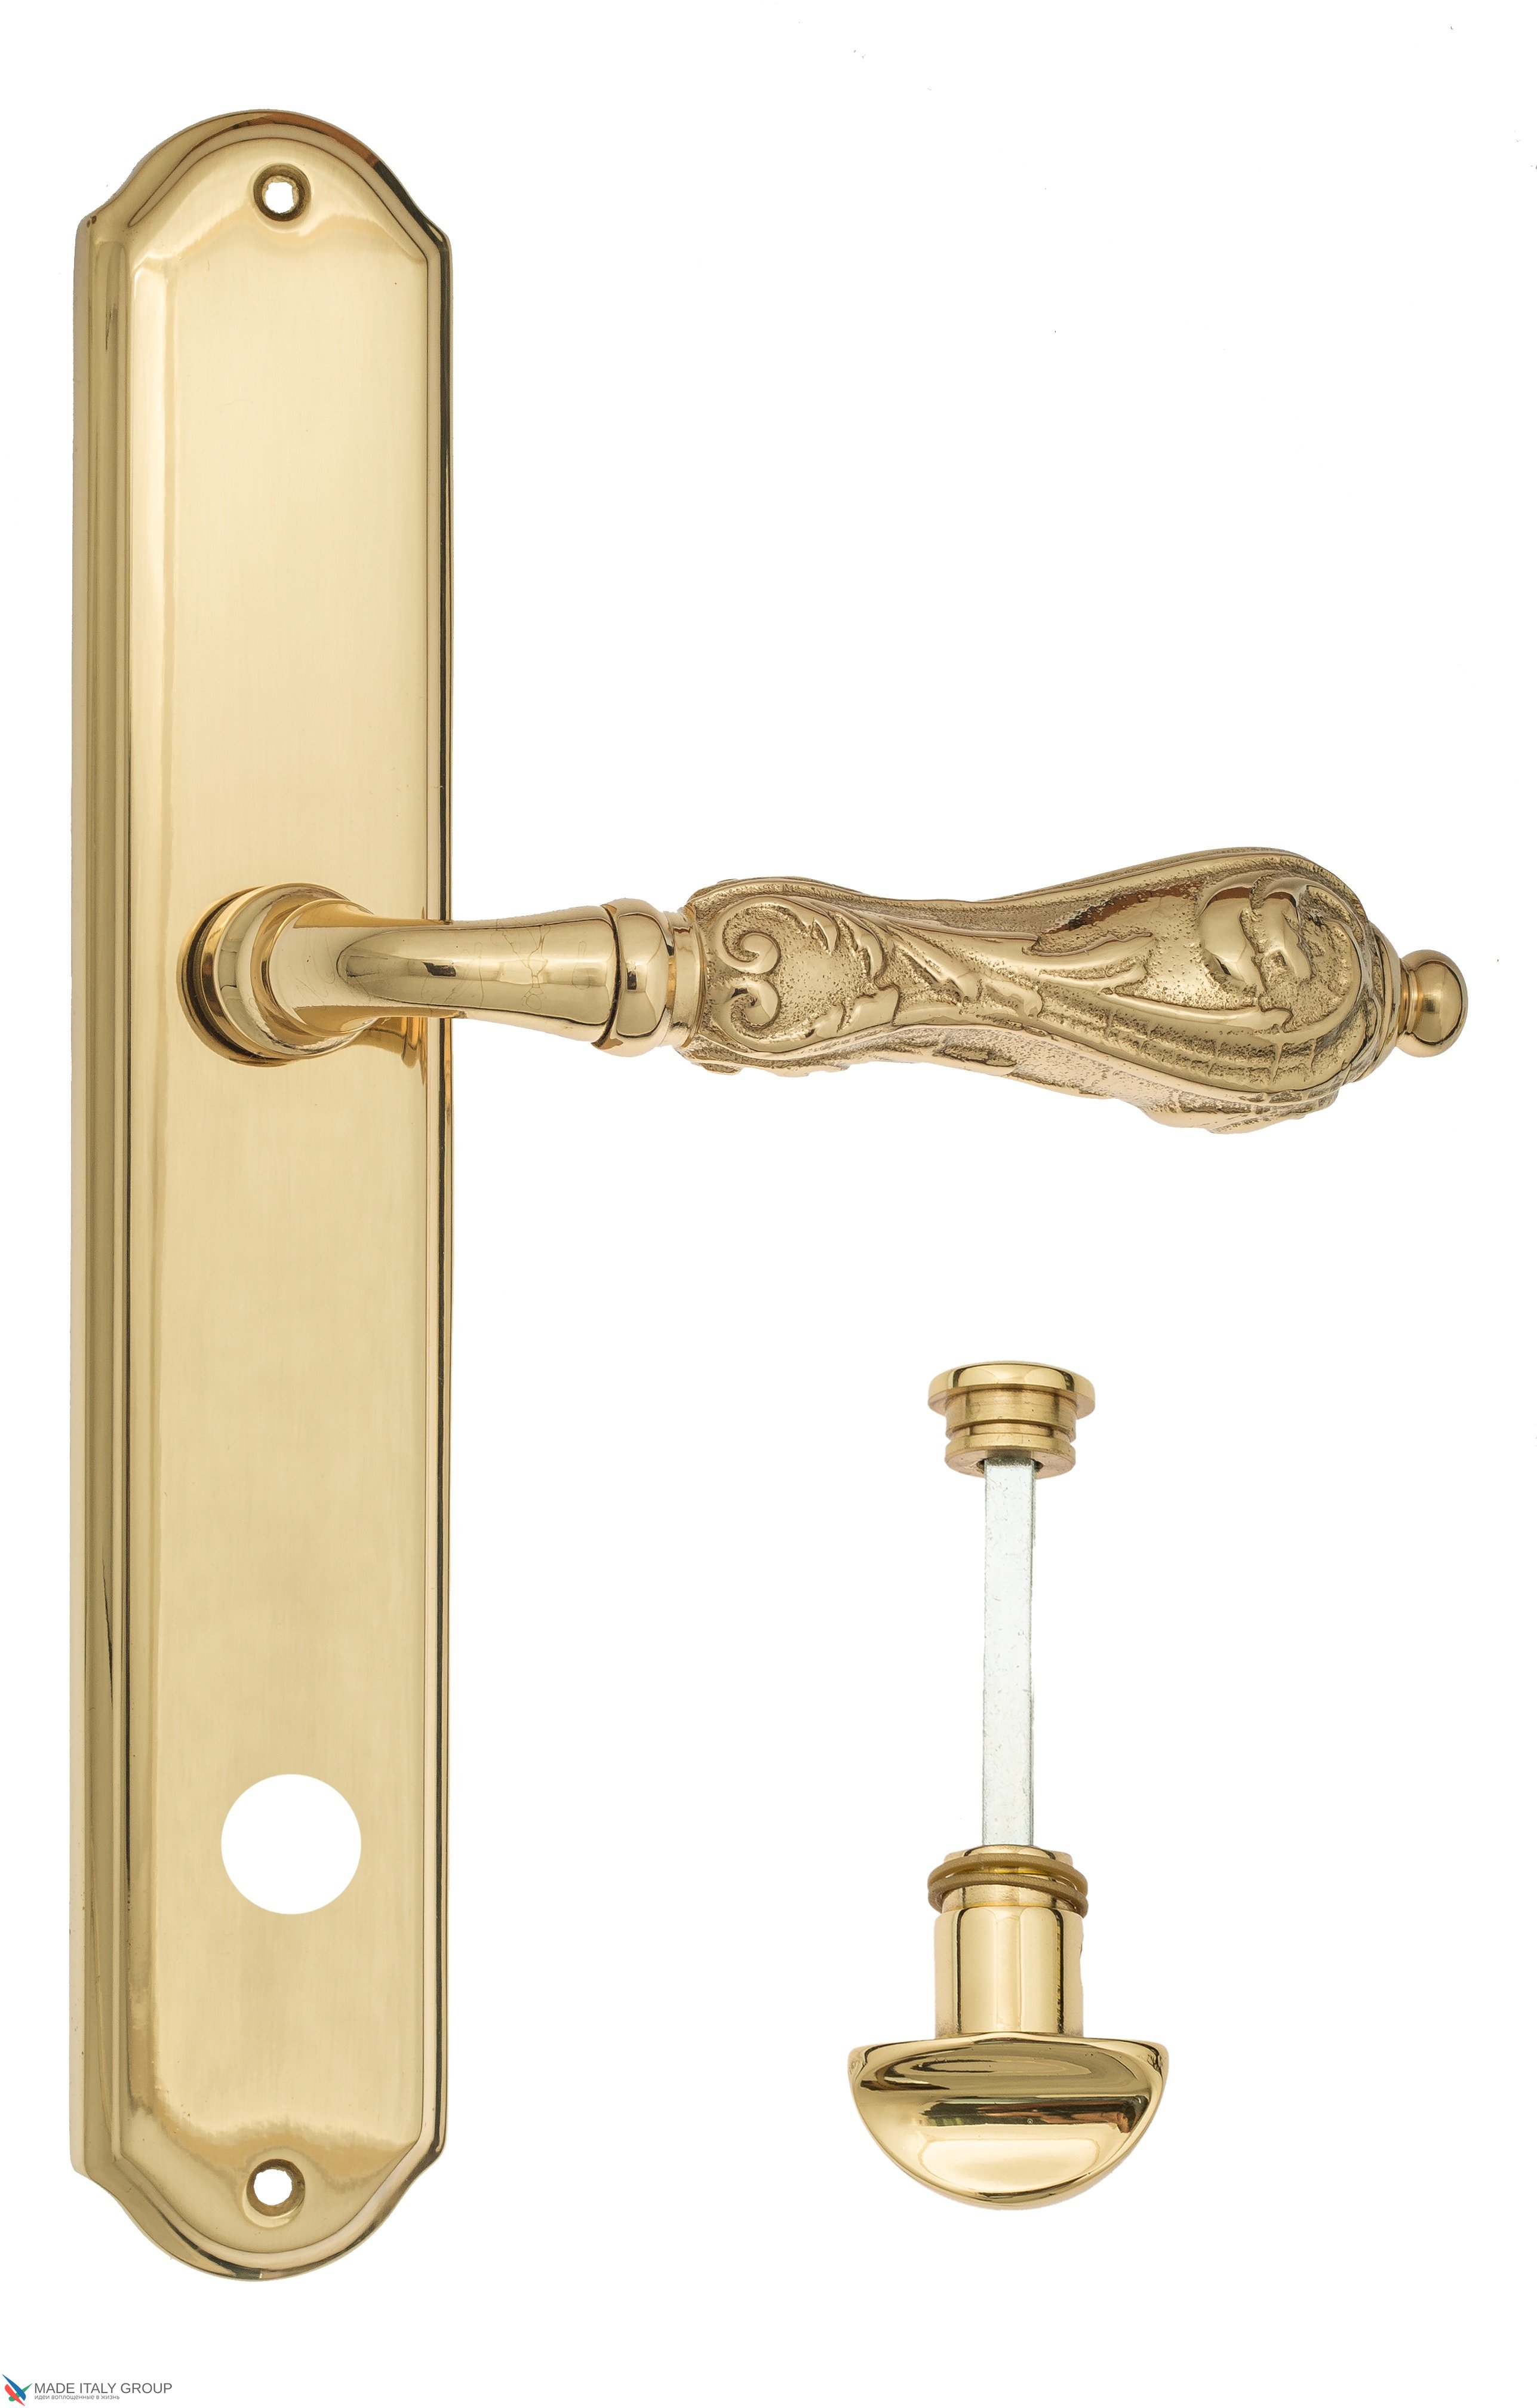 Дверная ручка Venezia "MONTE CRISTO" WC-2 на планке PL02 полированная латунь